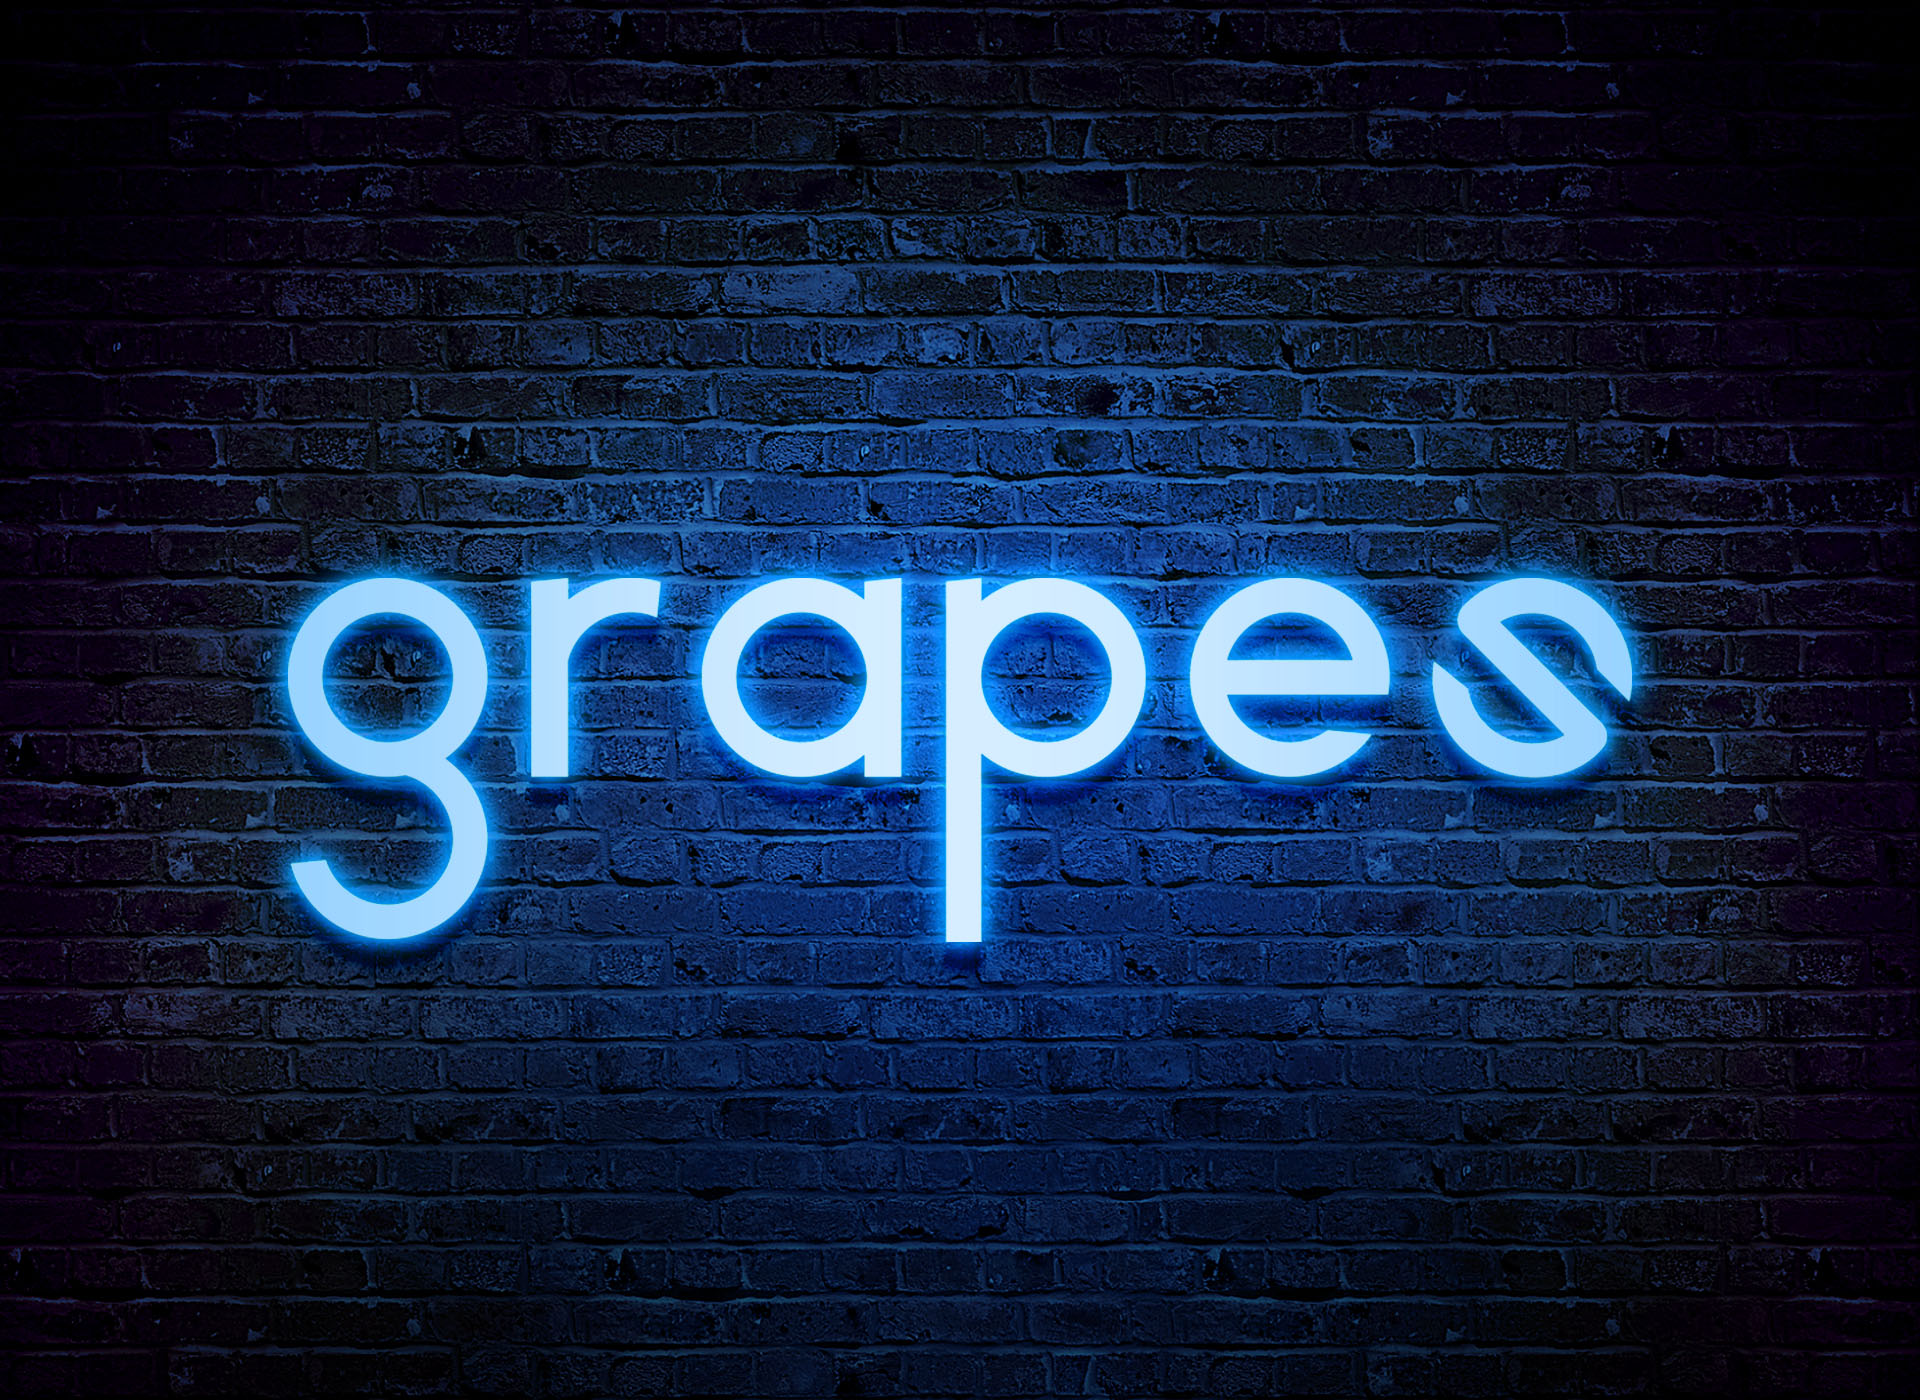 Grapes wine bar portfolio inoveo logo